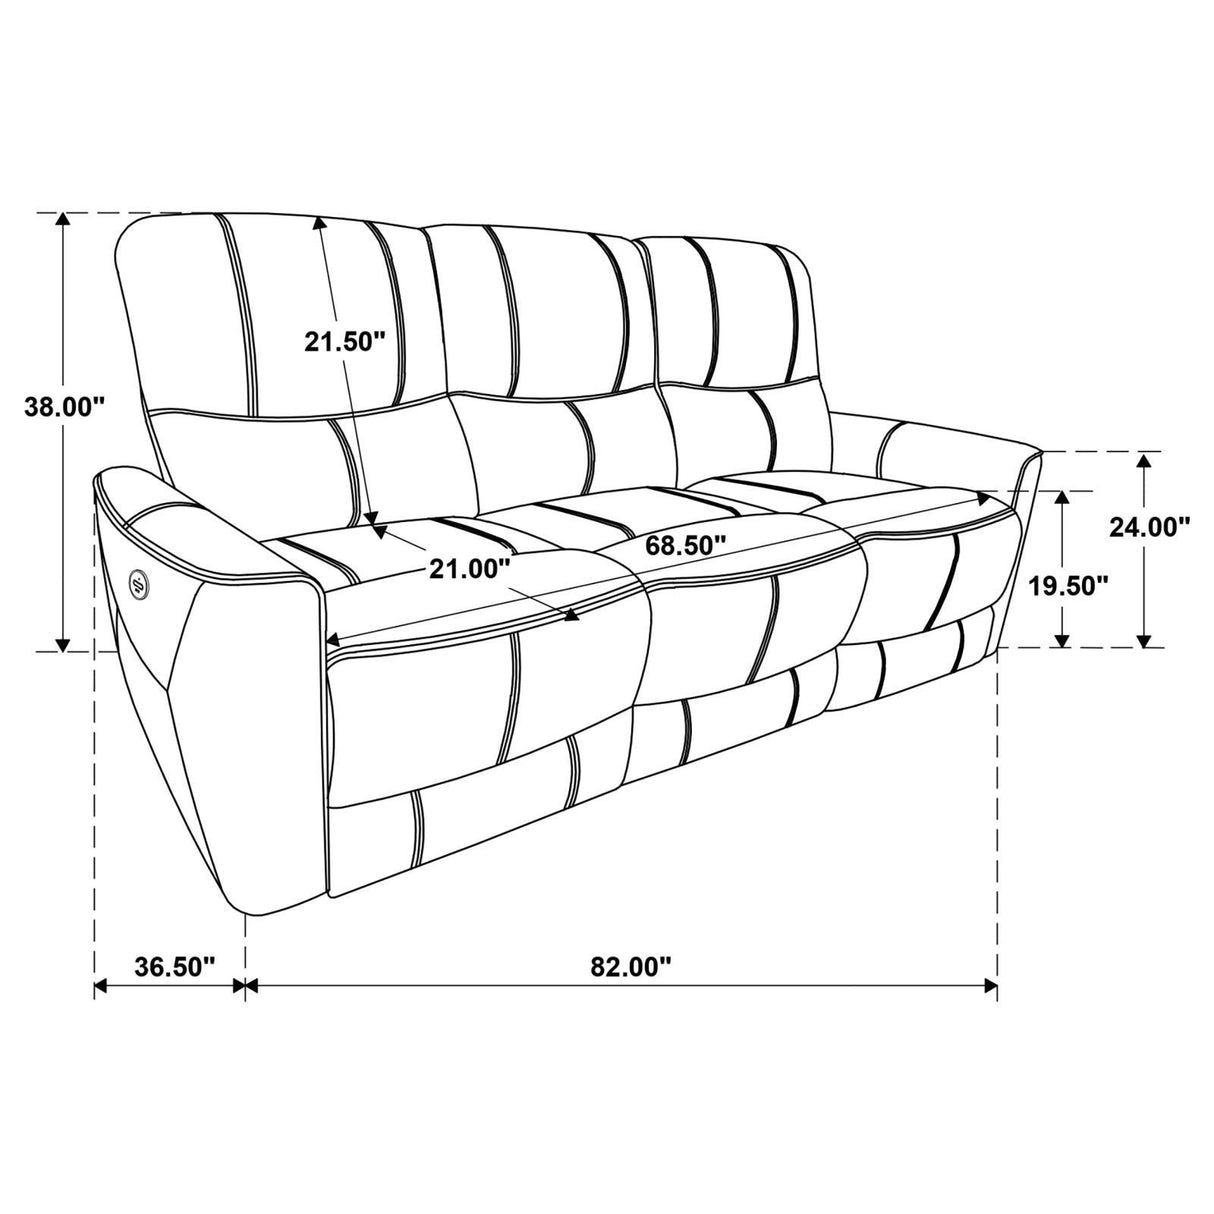 Greenfield Upholstered Power Reclining Sofa Saddle Brown 610264P - Ella Furniture